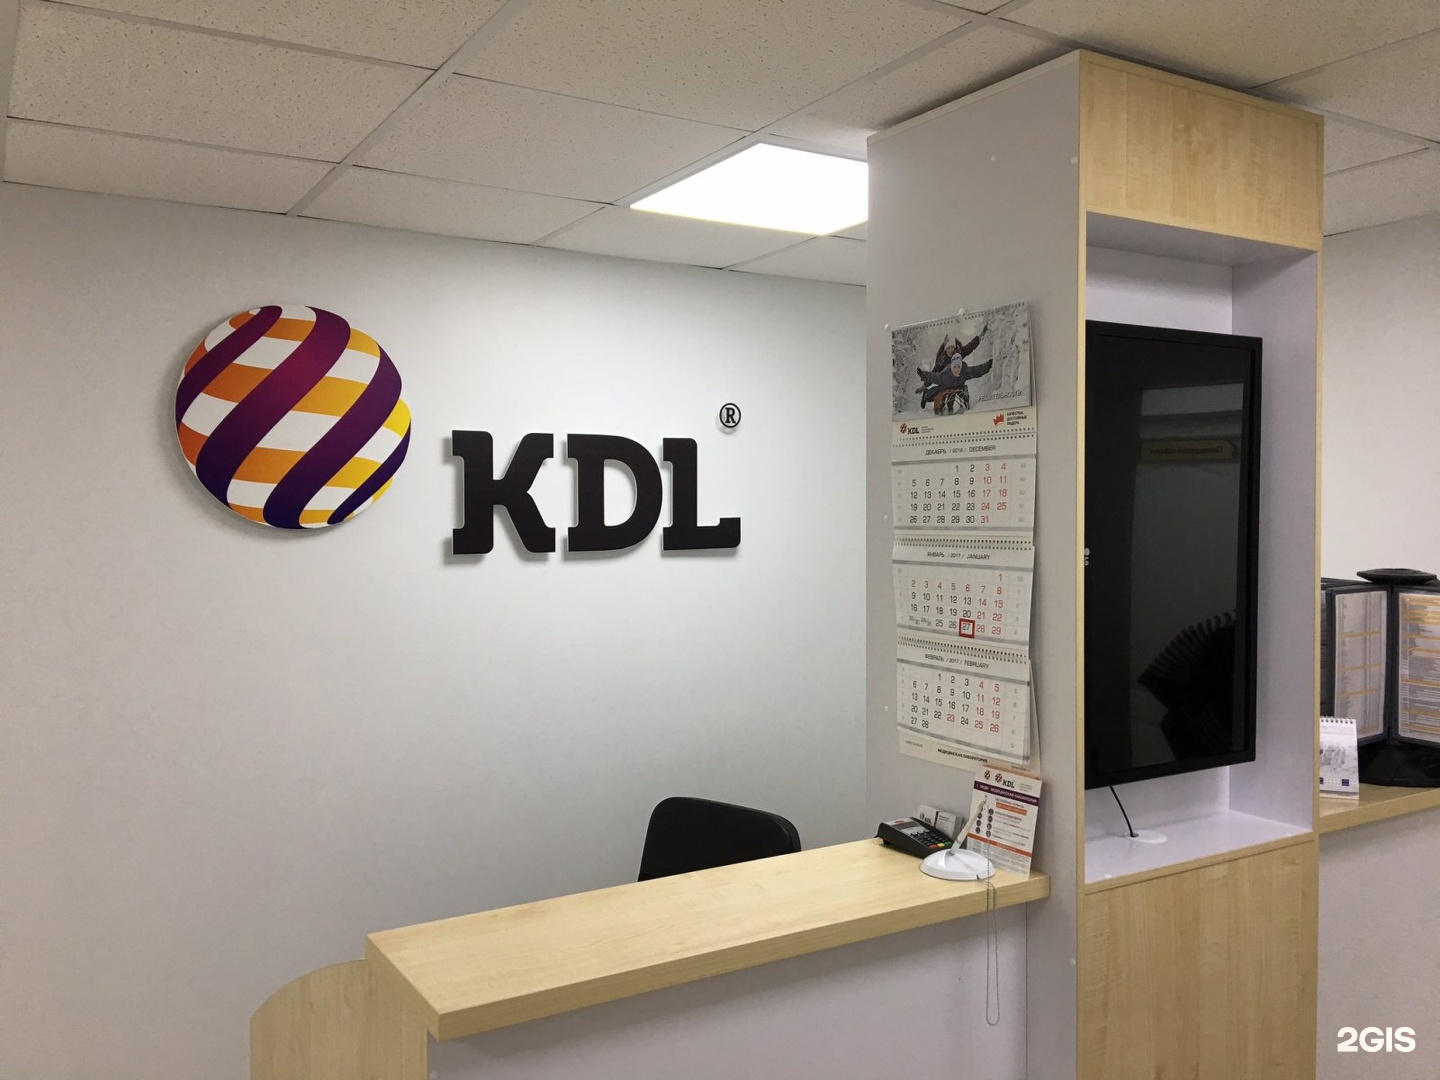 Кдл рядом. КДЛ лаборатория Омск. KDL логотип. Эмблема КДЛ лаборатории. KDL В Омске.